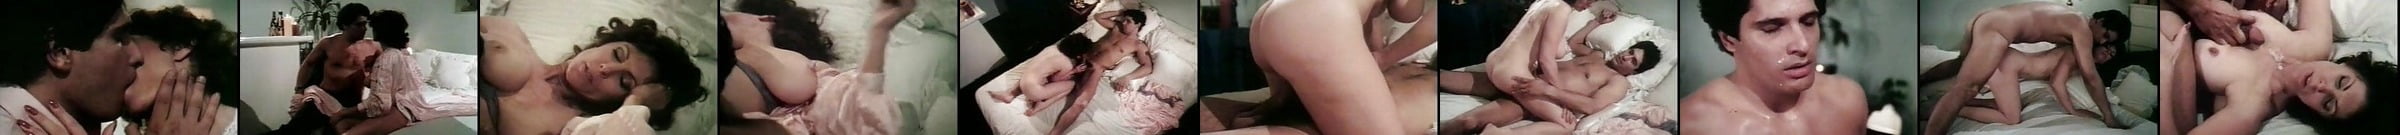 Colleen Brennan Free Vintage Porn Video 56 Xhamster Xhamster